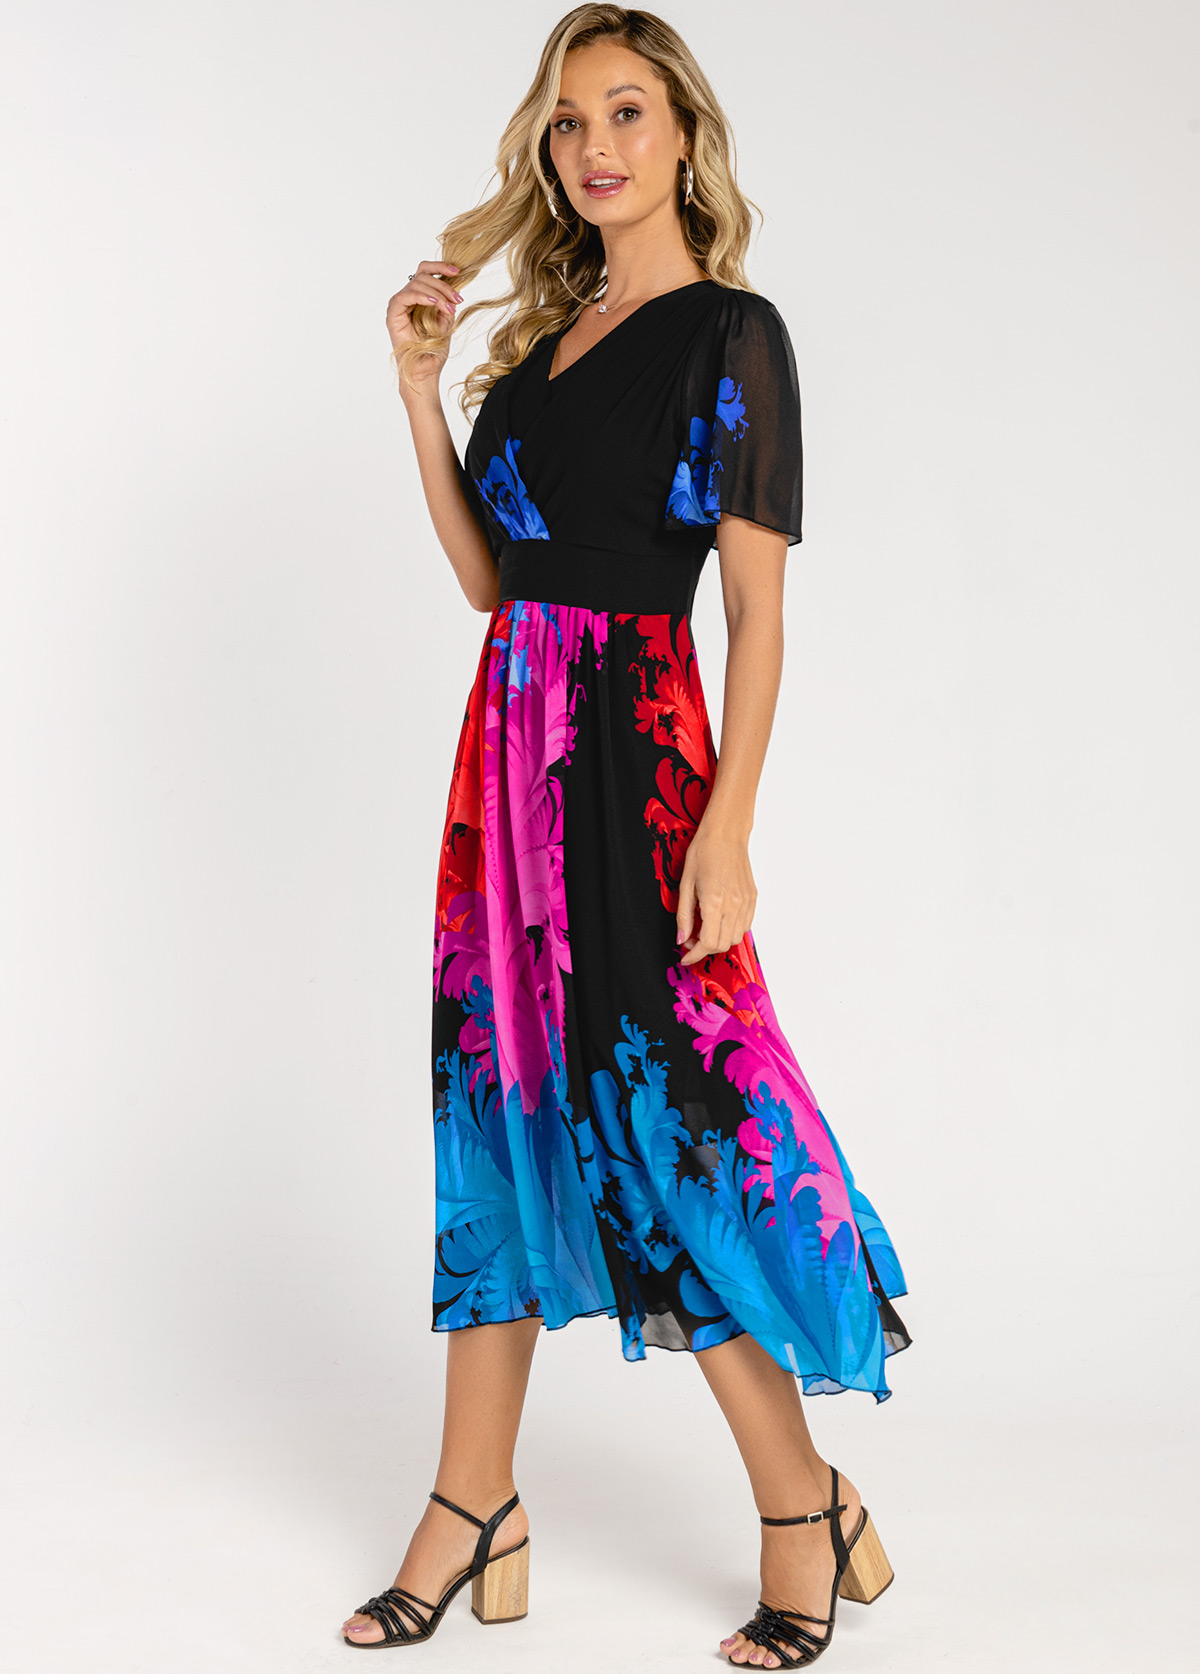 V Neck High Waisted Colorful Print Dress